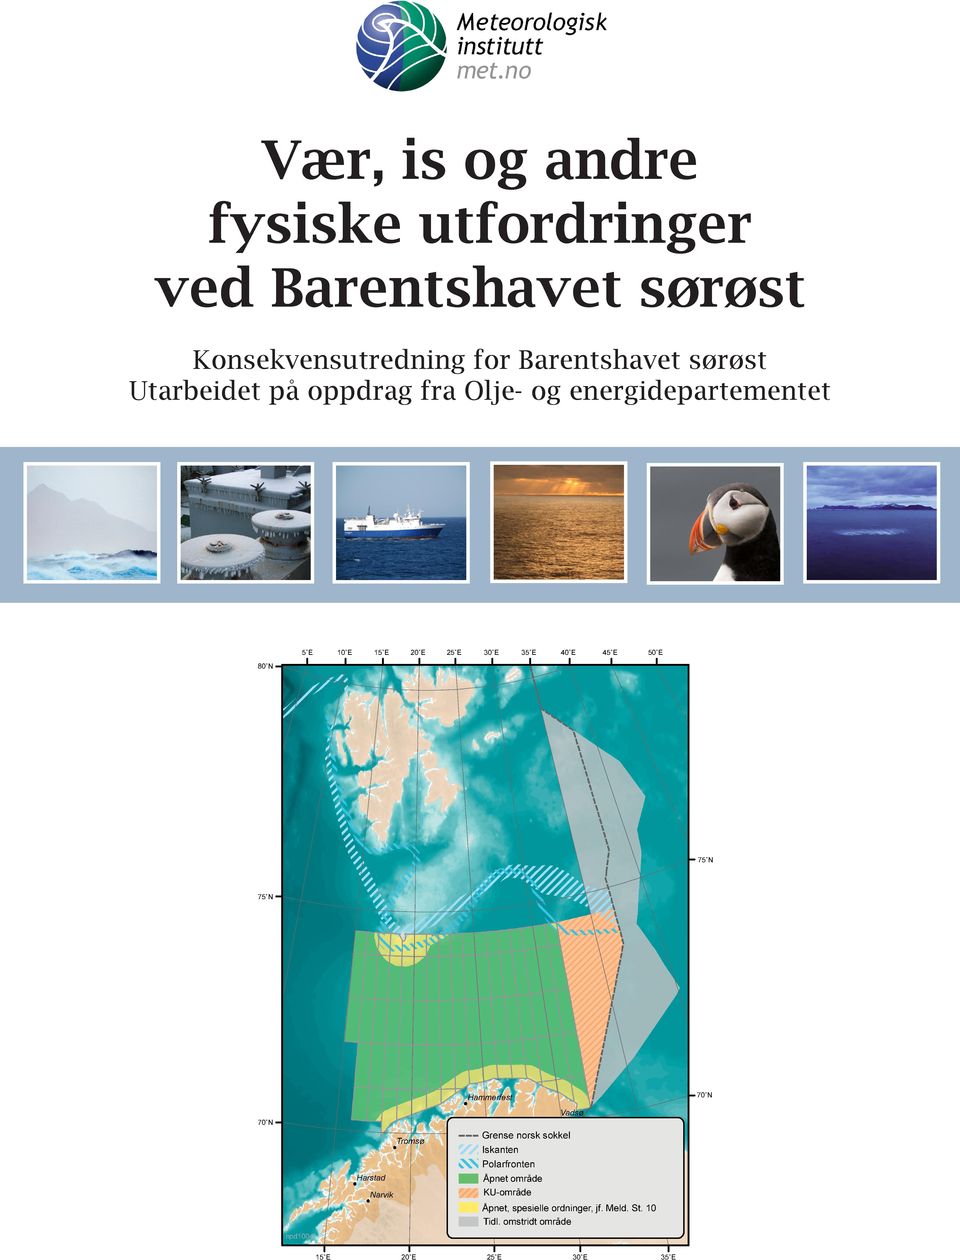 Konsekvensutredning for Barentshavet